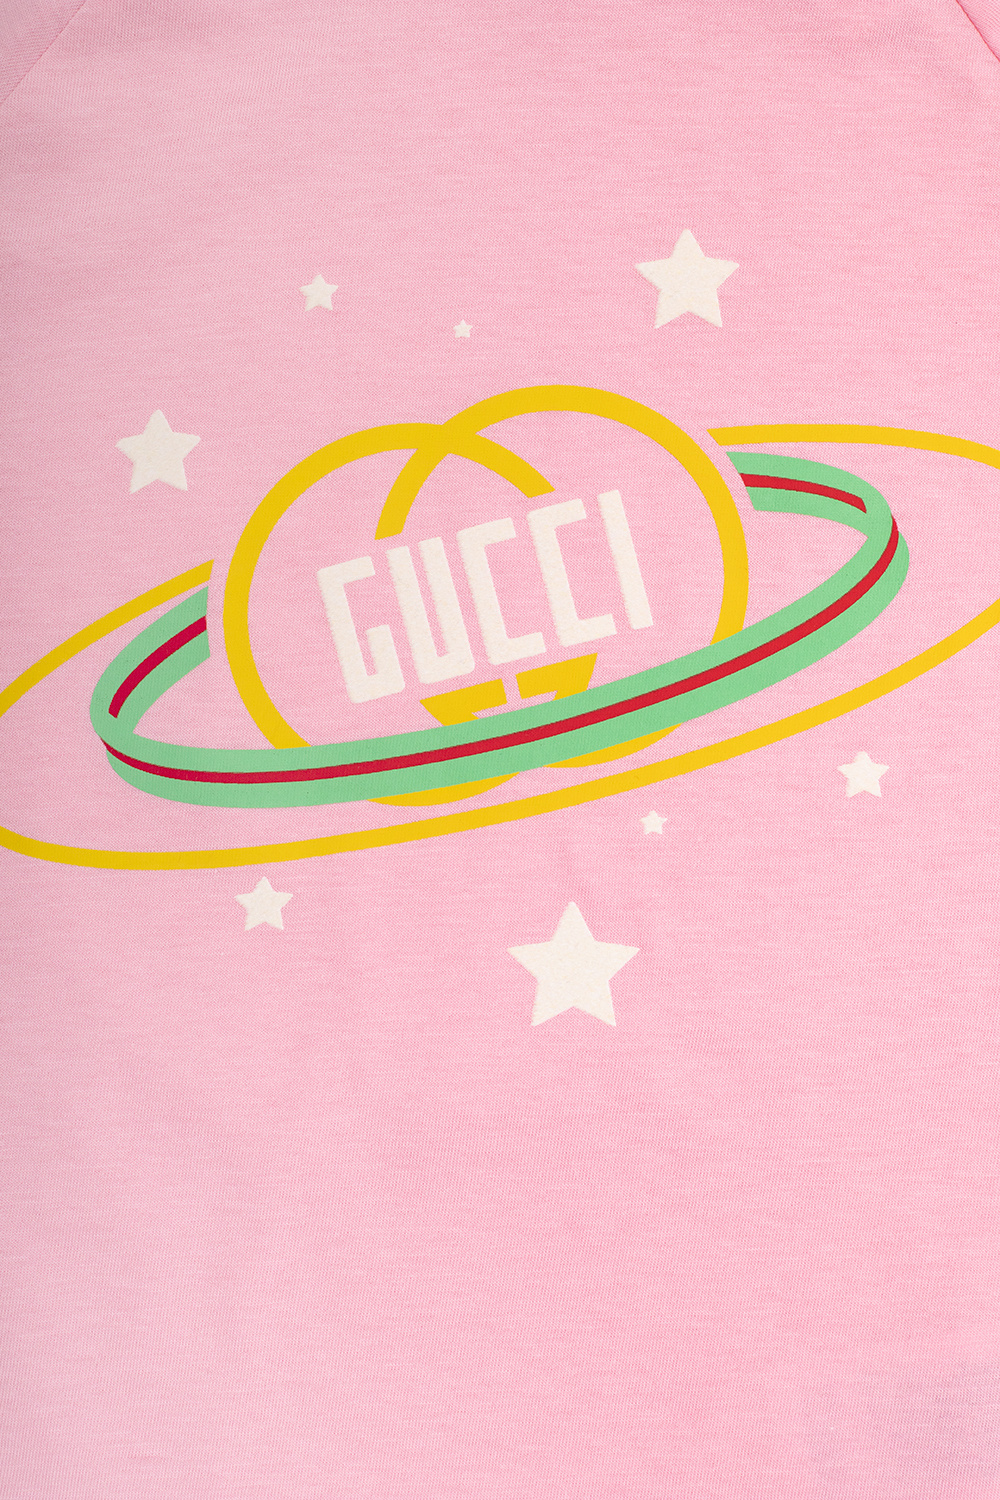 gucci Bag Kids T-shirt with logo